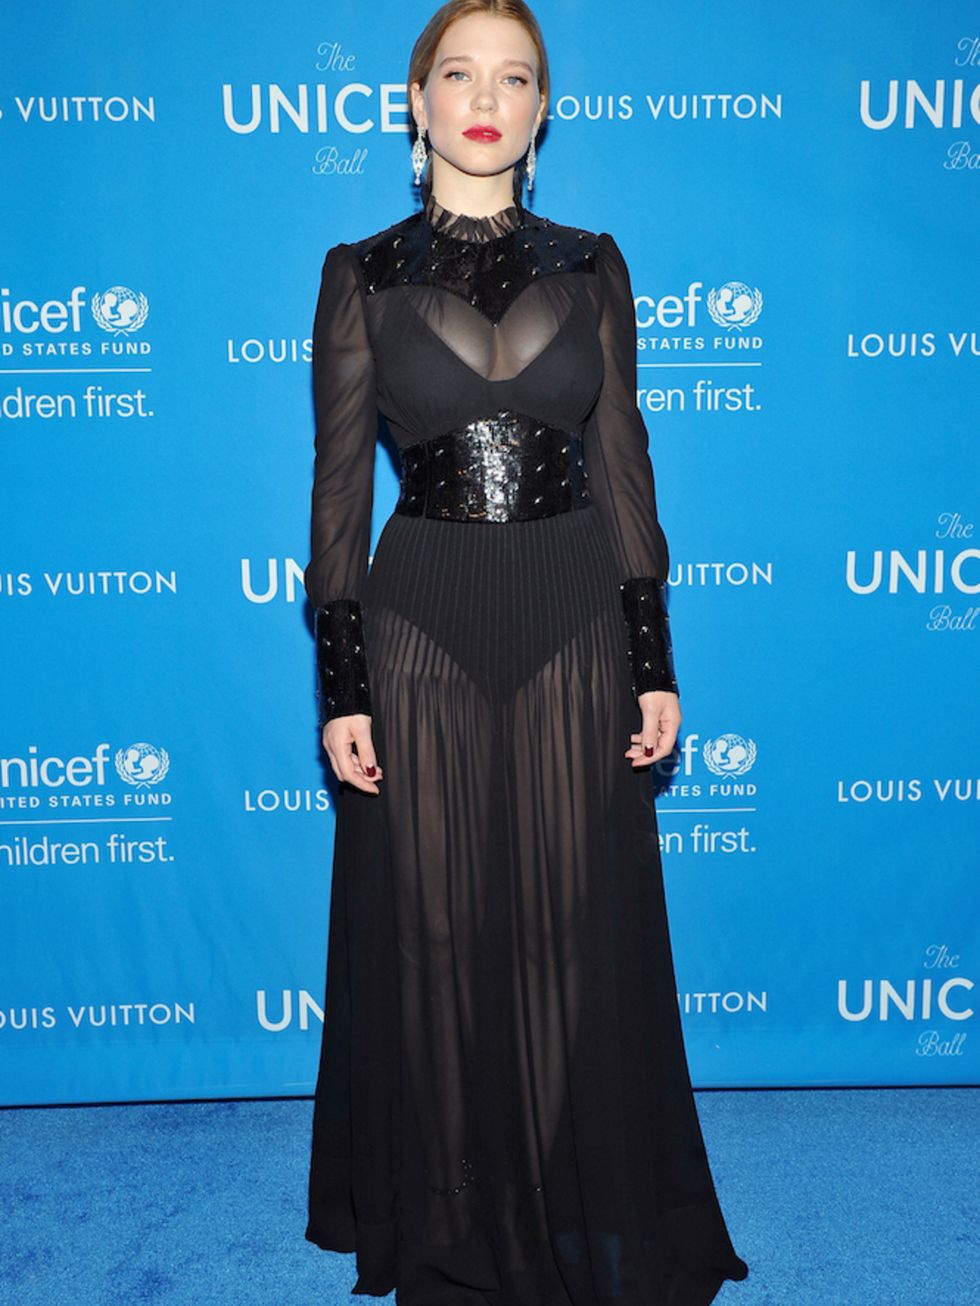 Actress Léa Seydoux sporting Louis Vuitton as Mariah Carey headlines the sixth UNICEF ball in January 2016